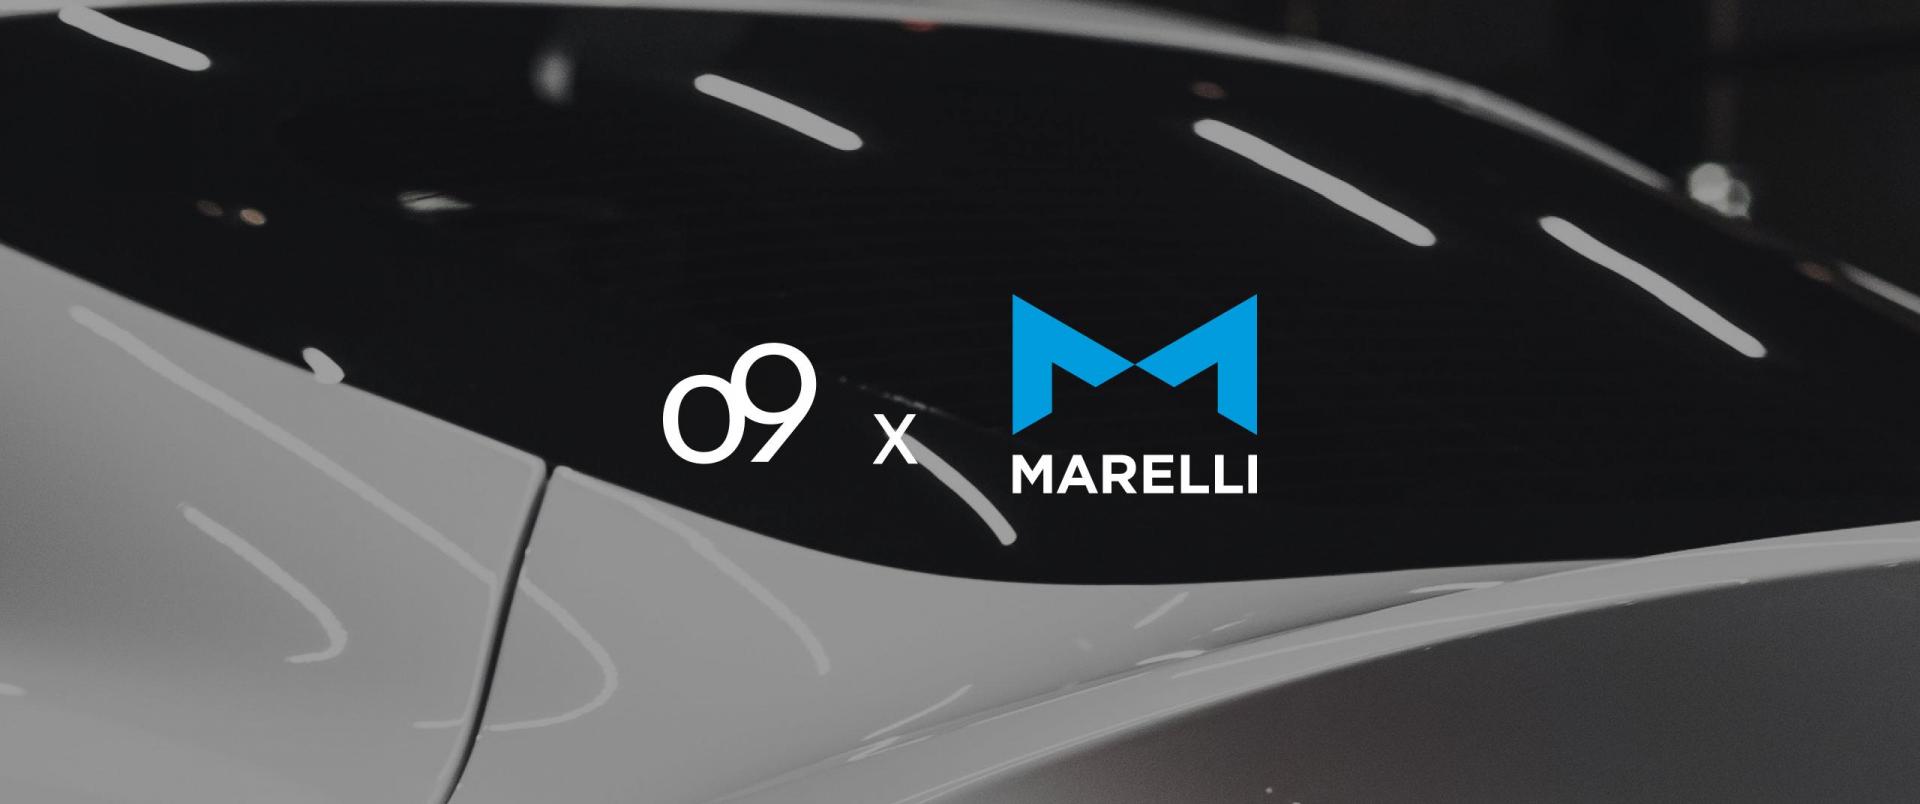 O9 and marelli logos